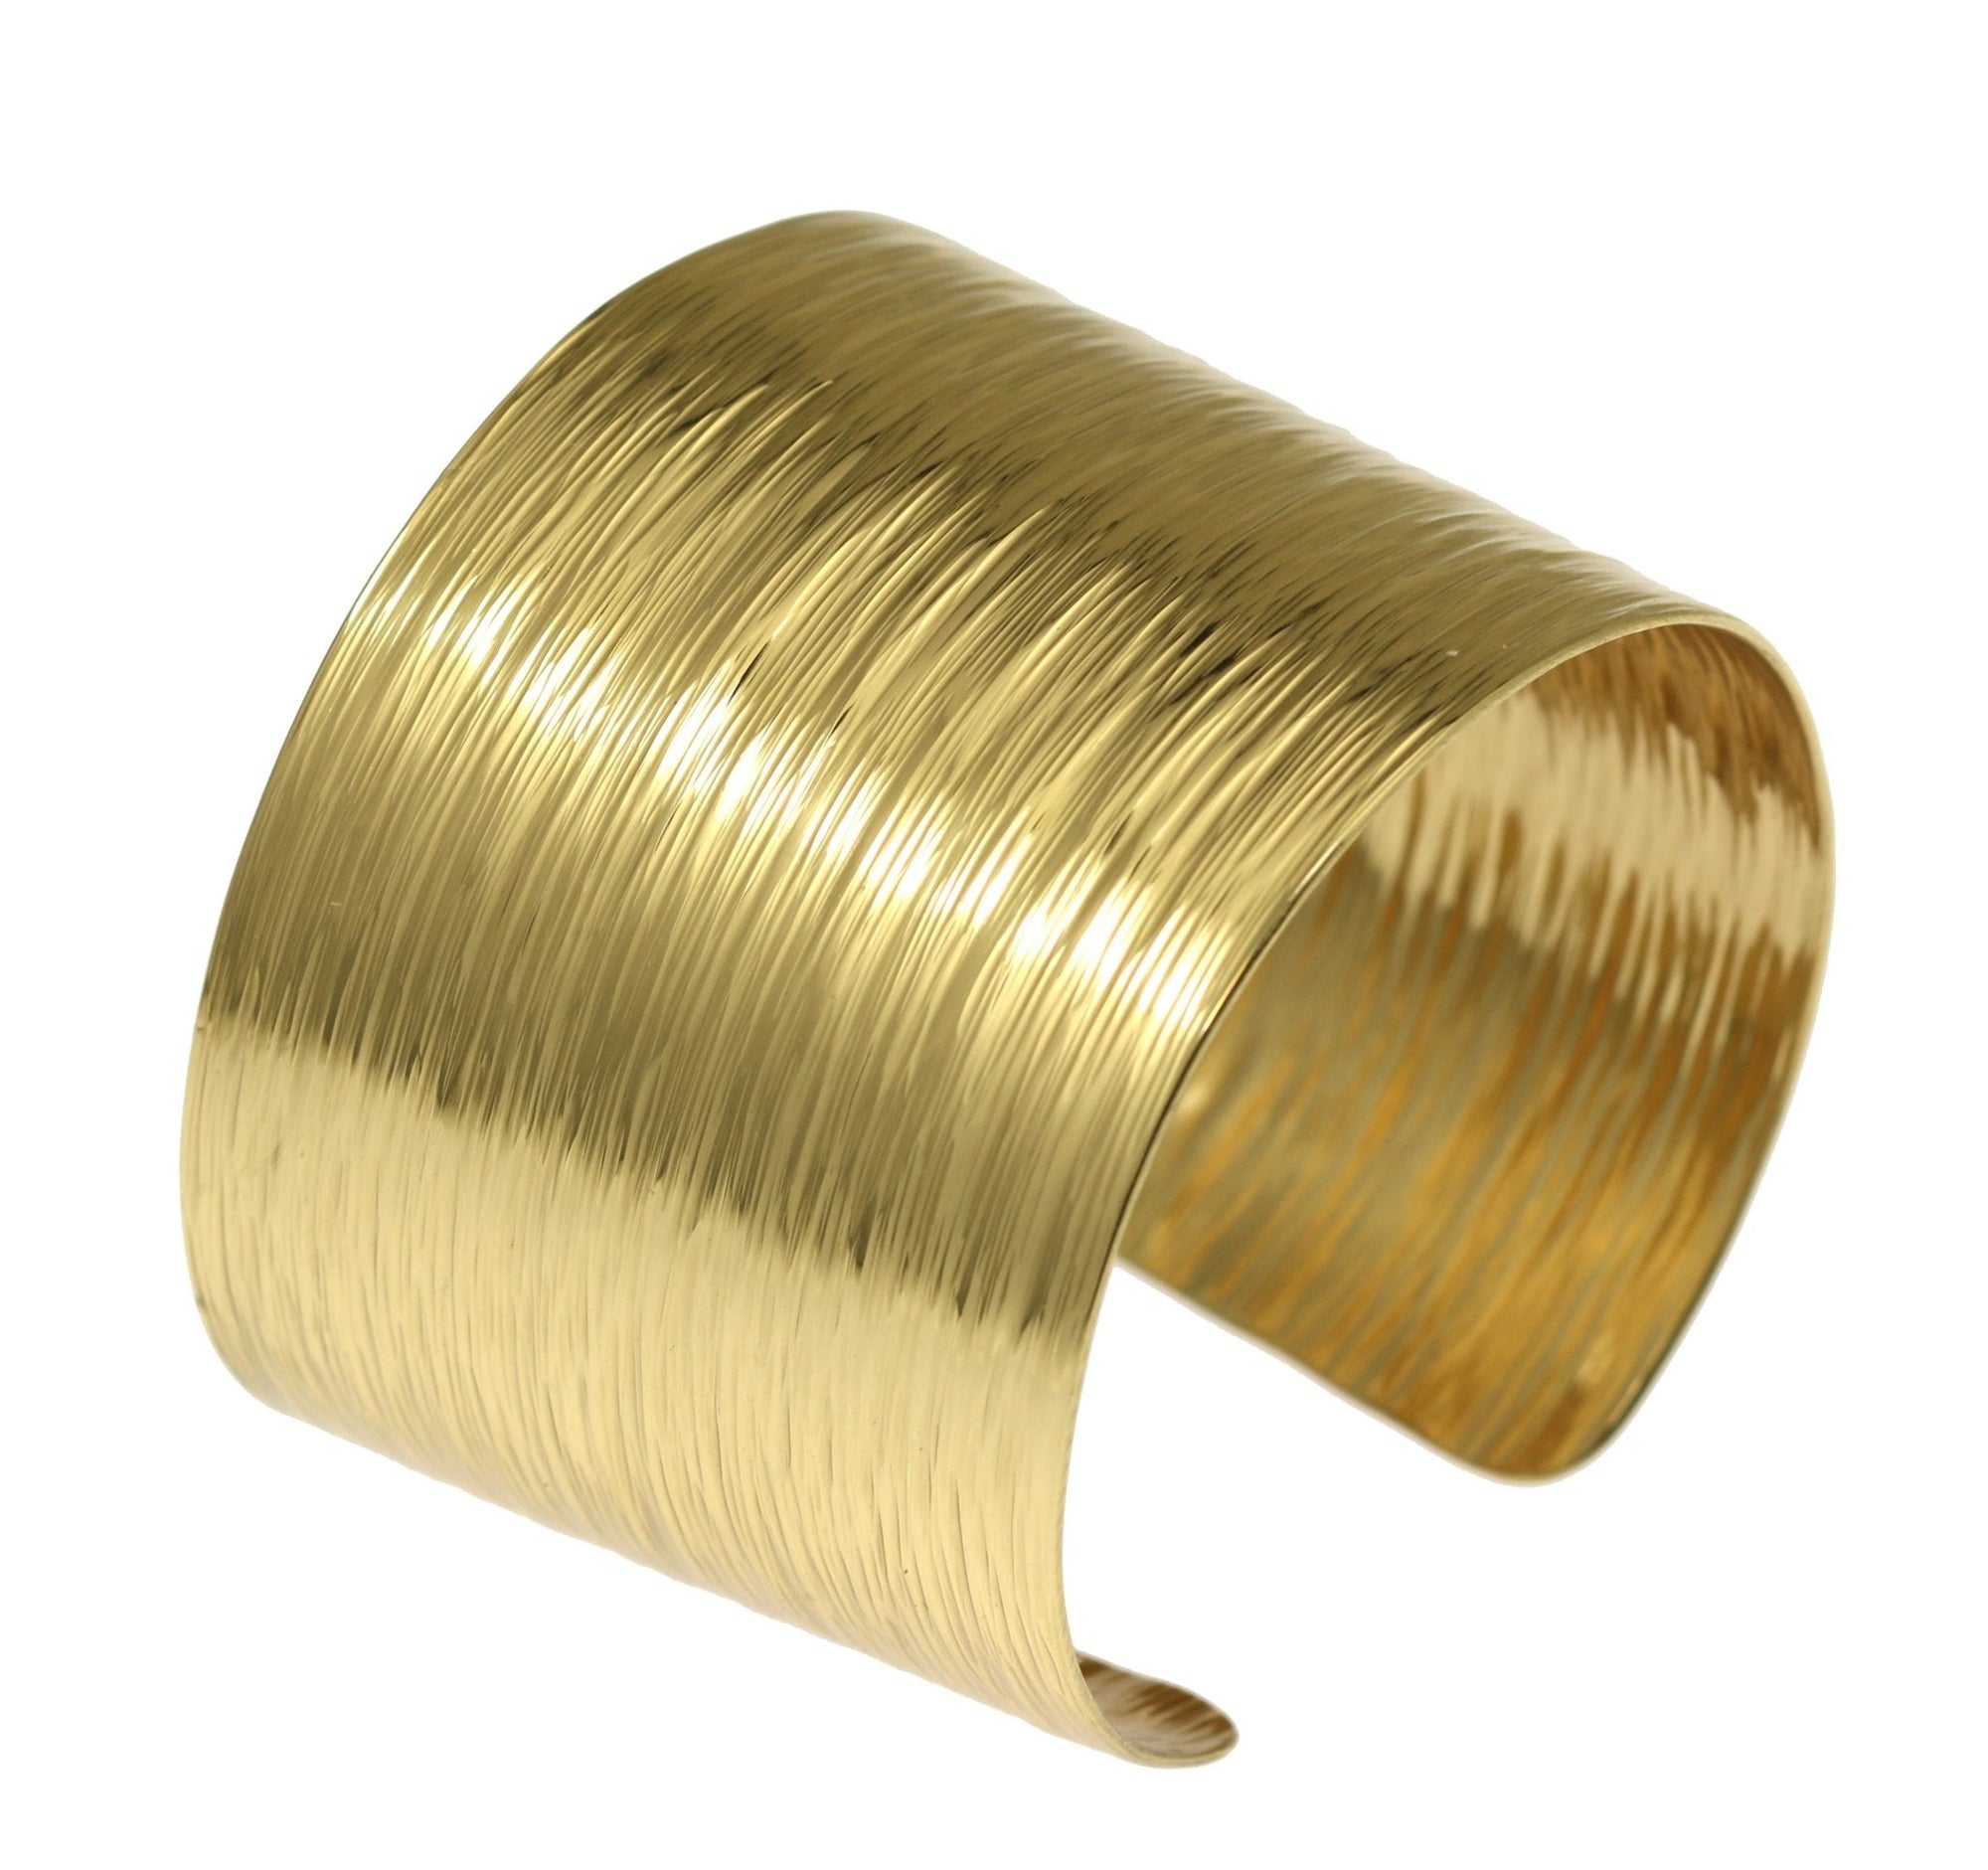 Stunning Nu Gold Brass Jewelry - Handcrafted Elegance